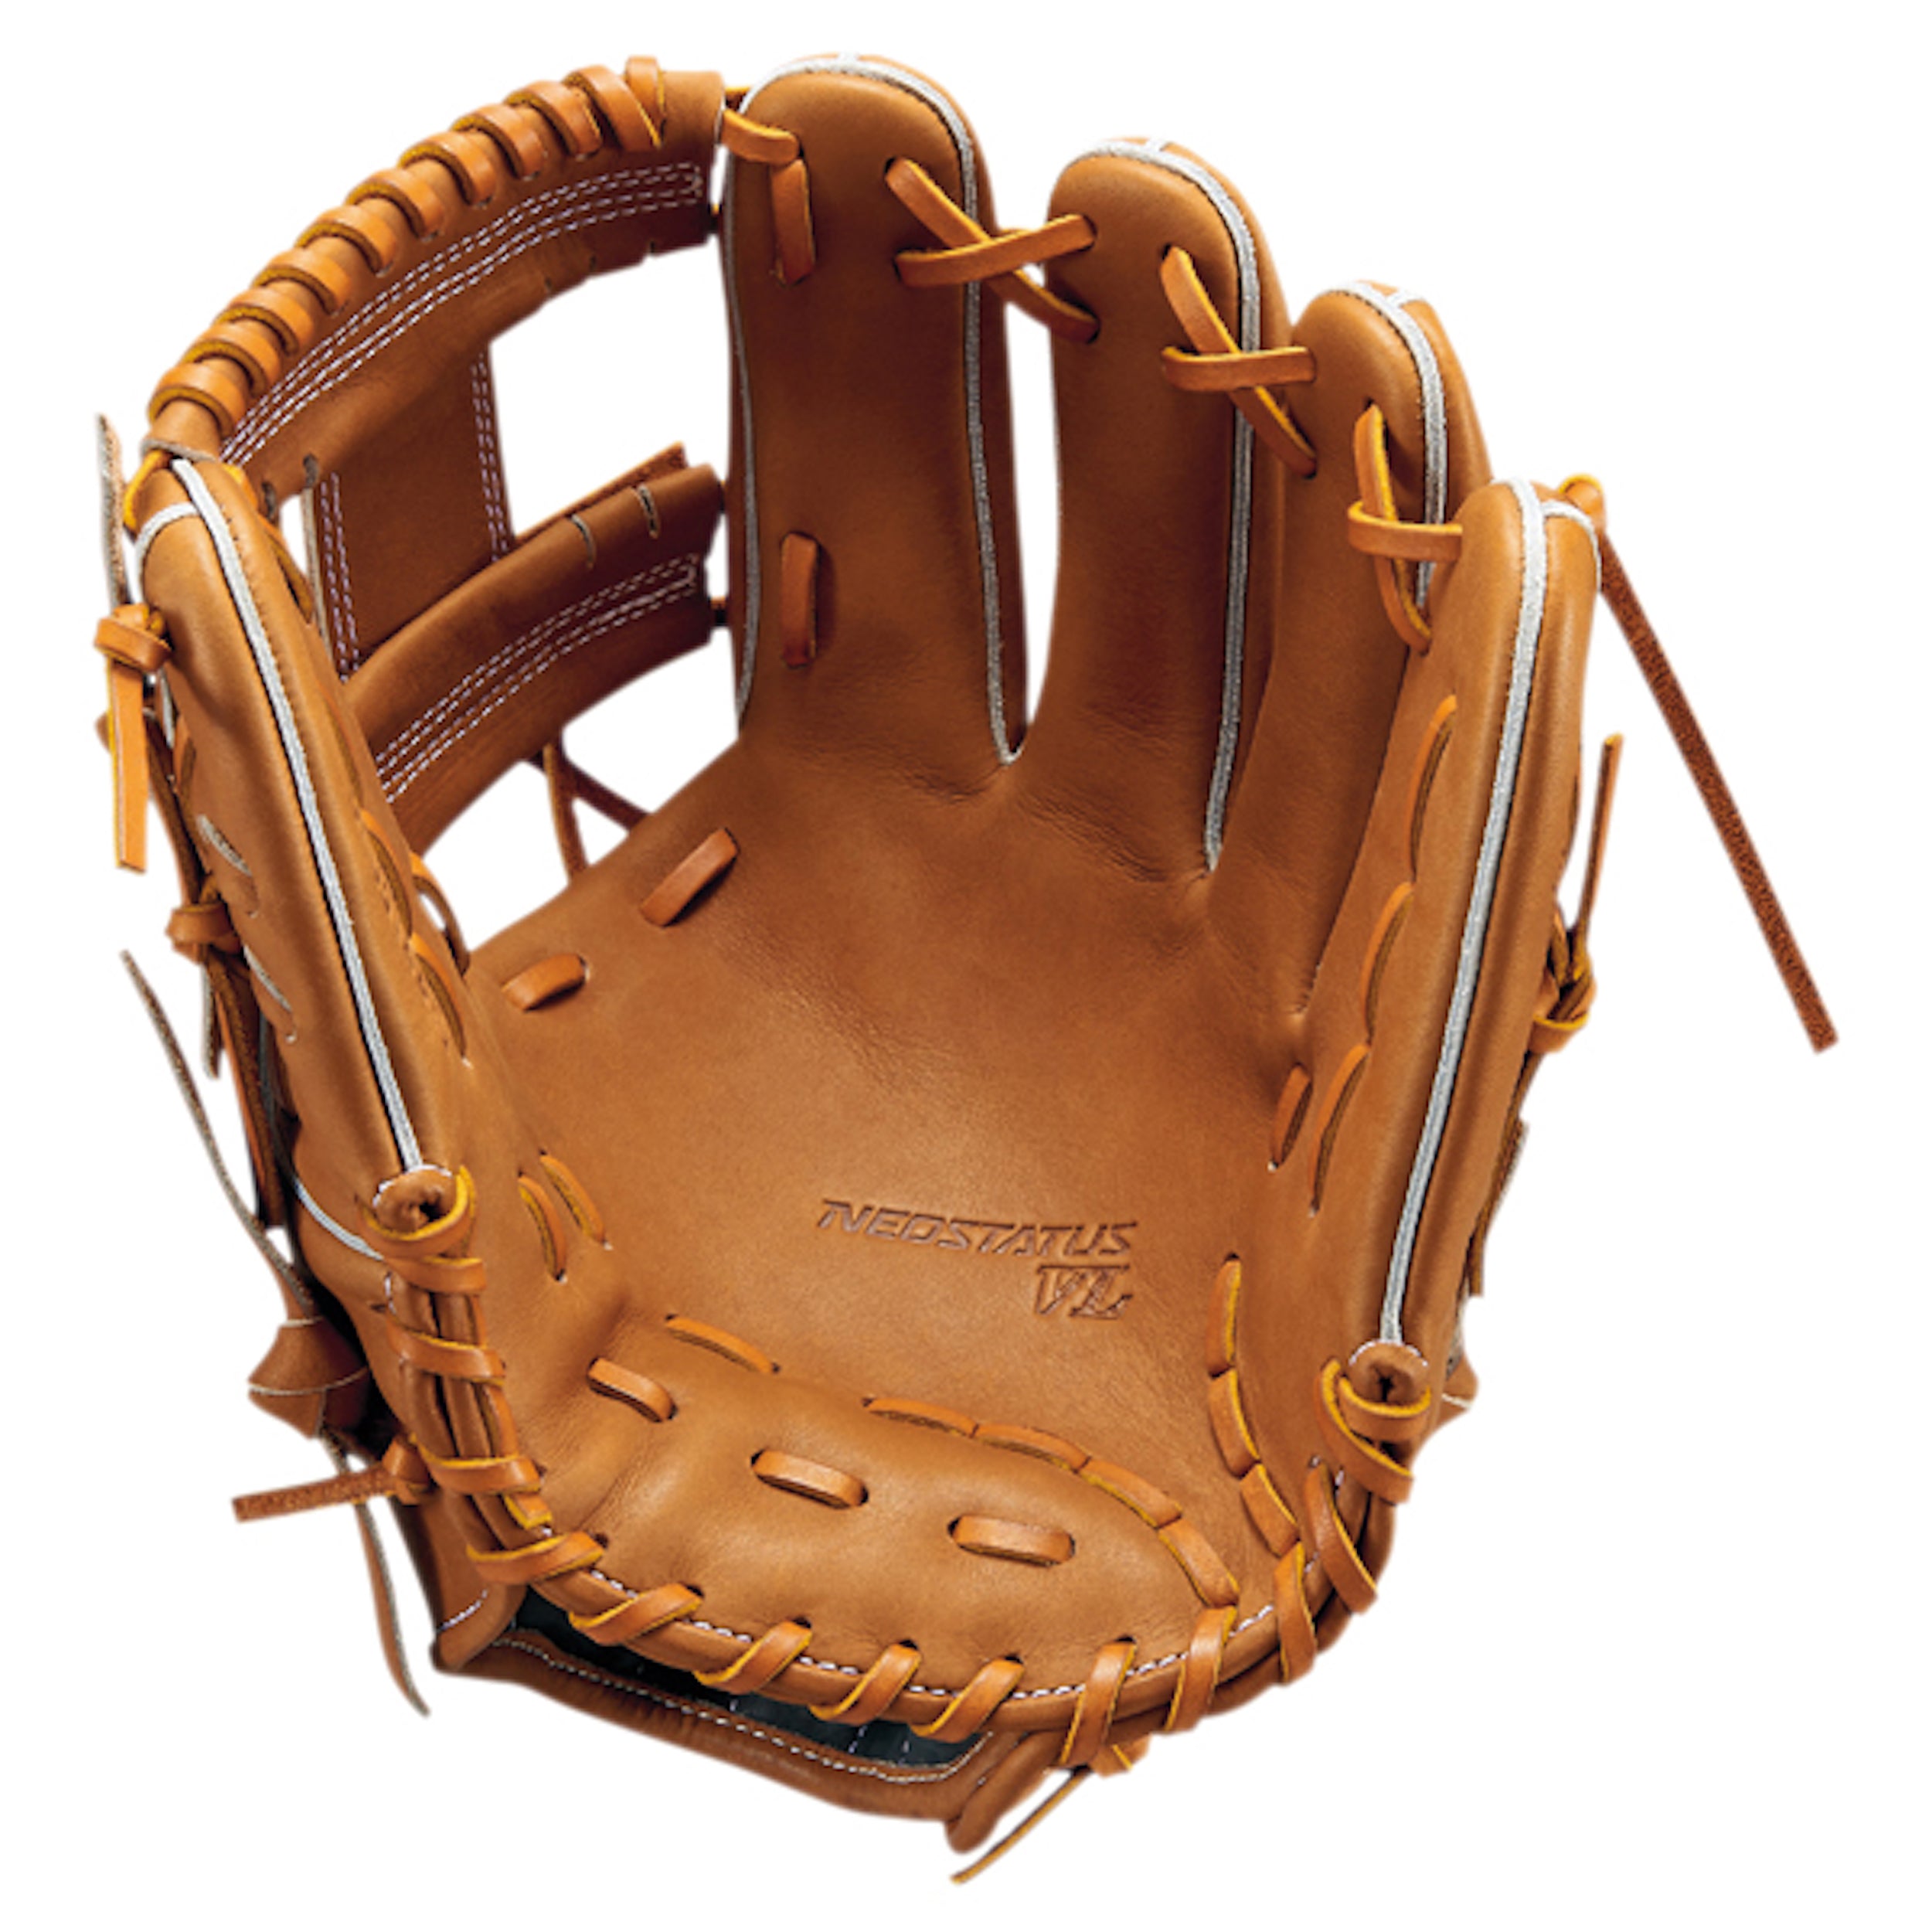 ZETT NEOSTATUS Baseball Infield Glove BPGB12210